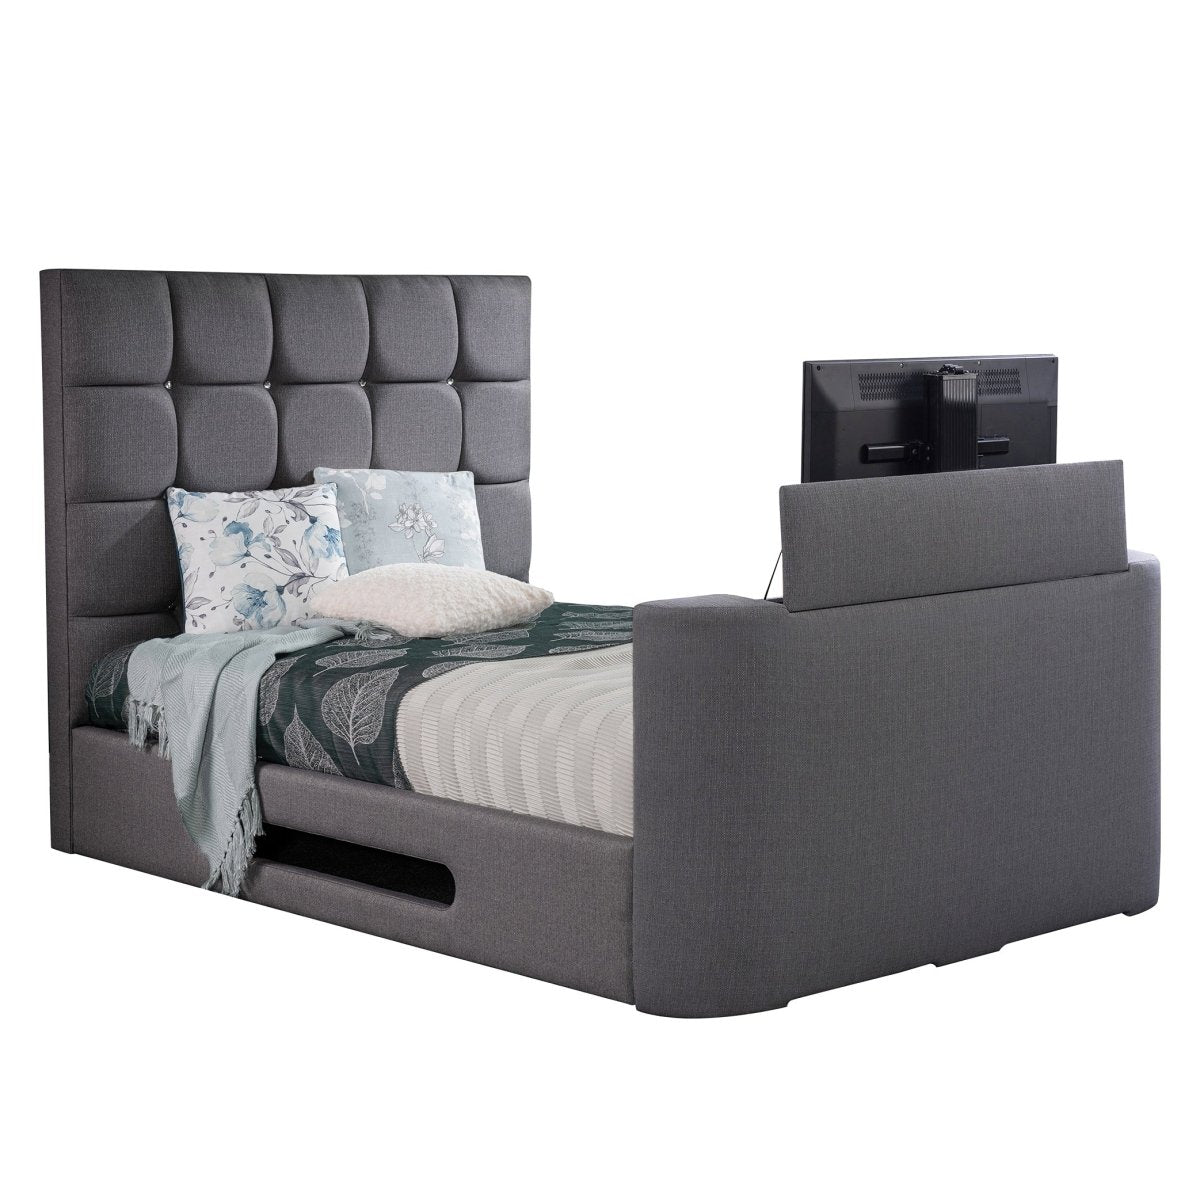 Jasmine Jewel Standard TV Bed frame - Sweet Dreams - TV Beds Northwest - INI - choose your colour tvbed - doubletvbed